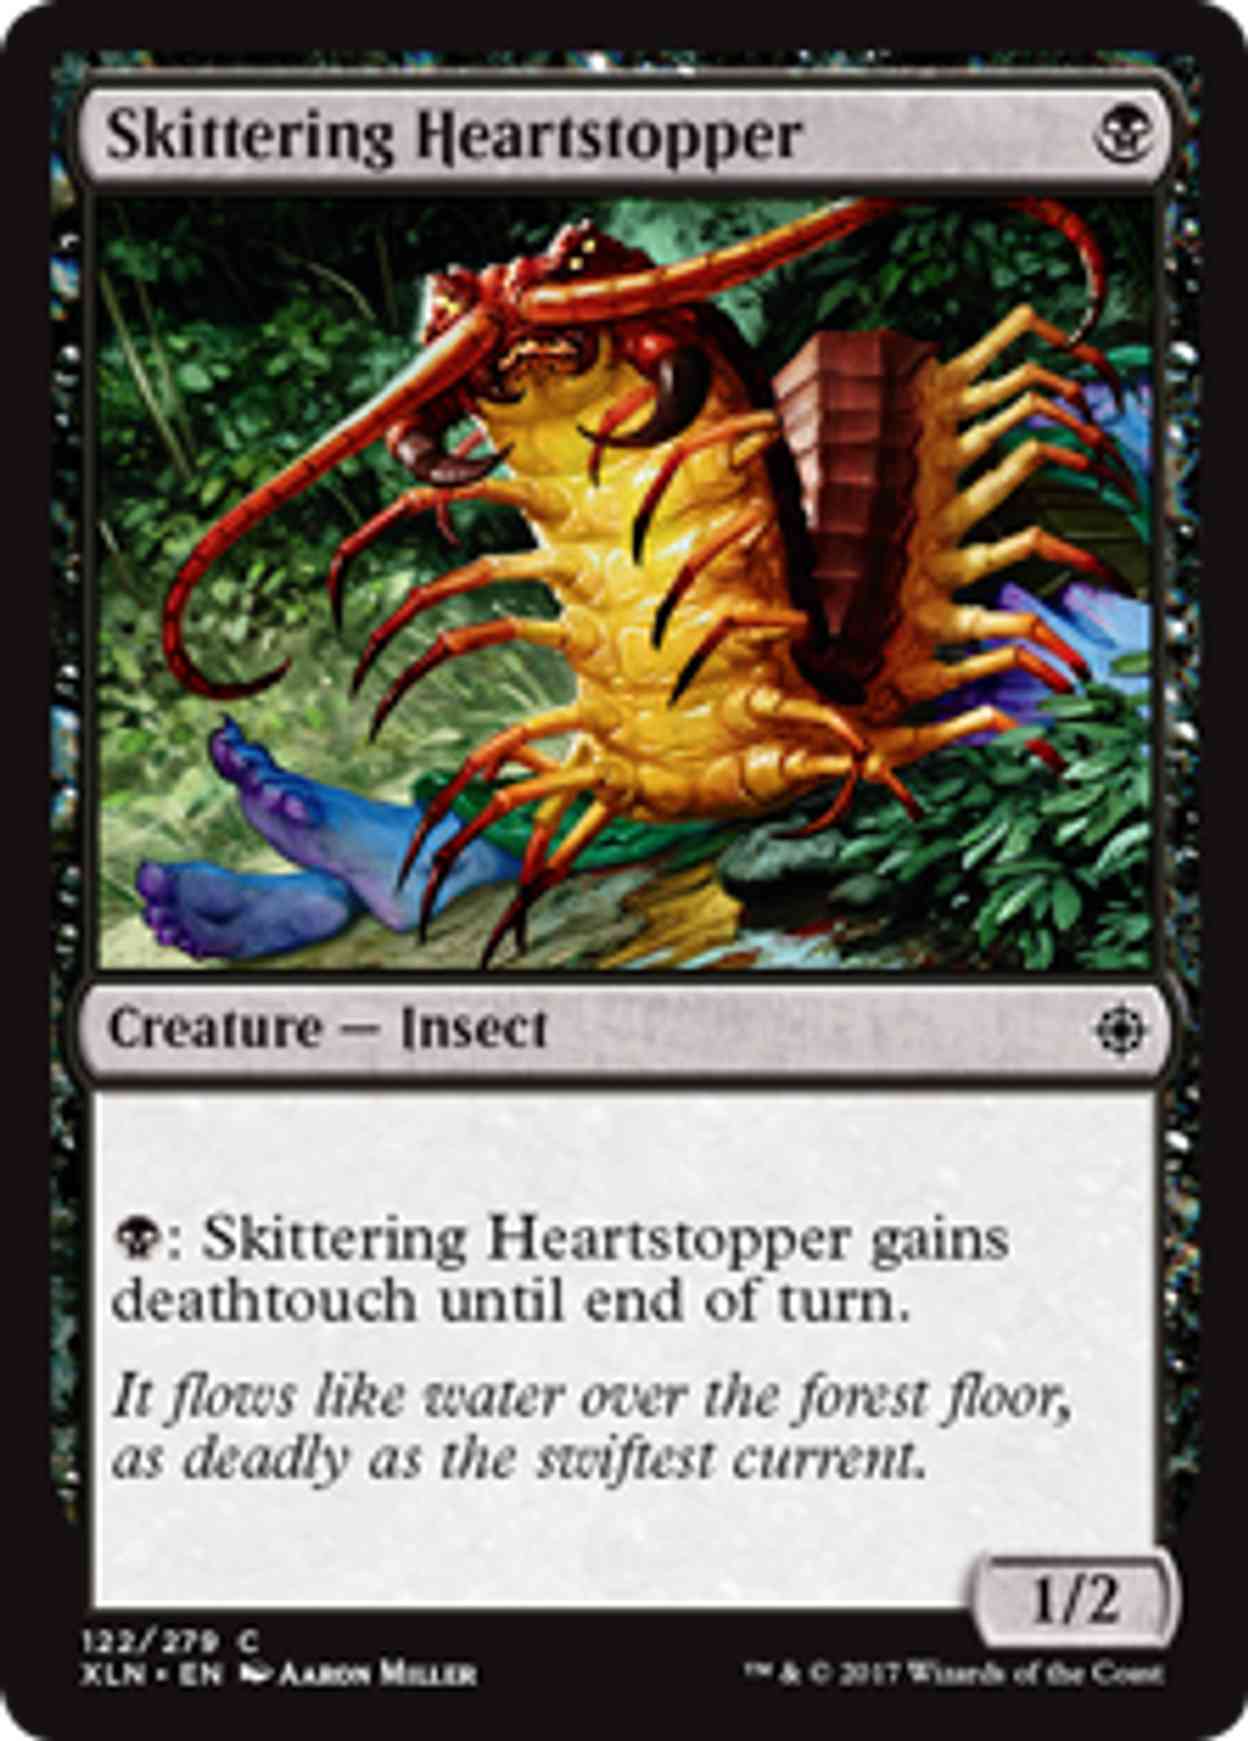 Skittering Heartstopper magic card front